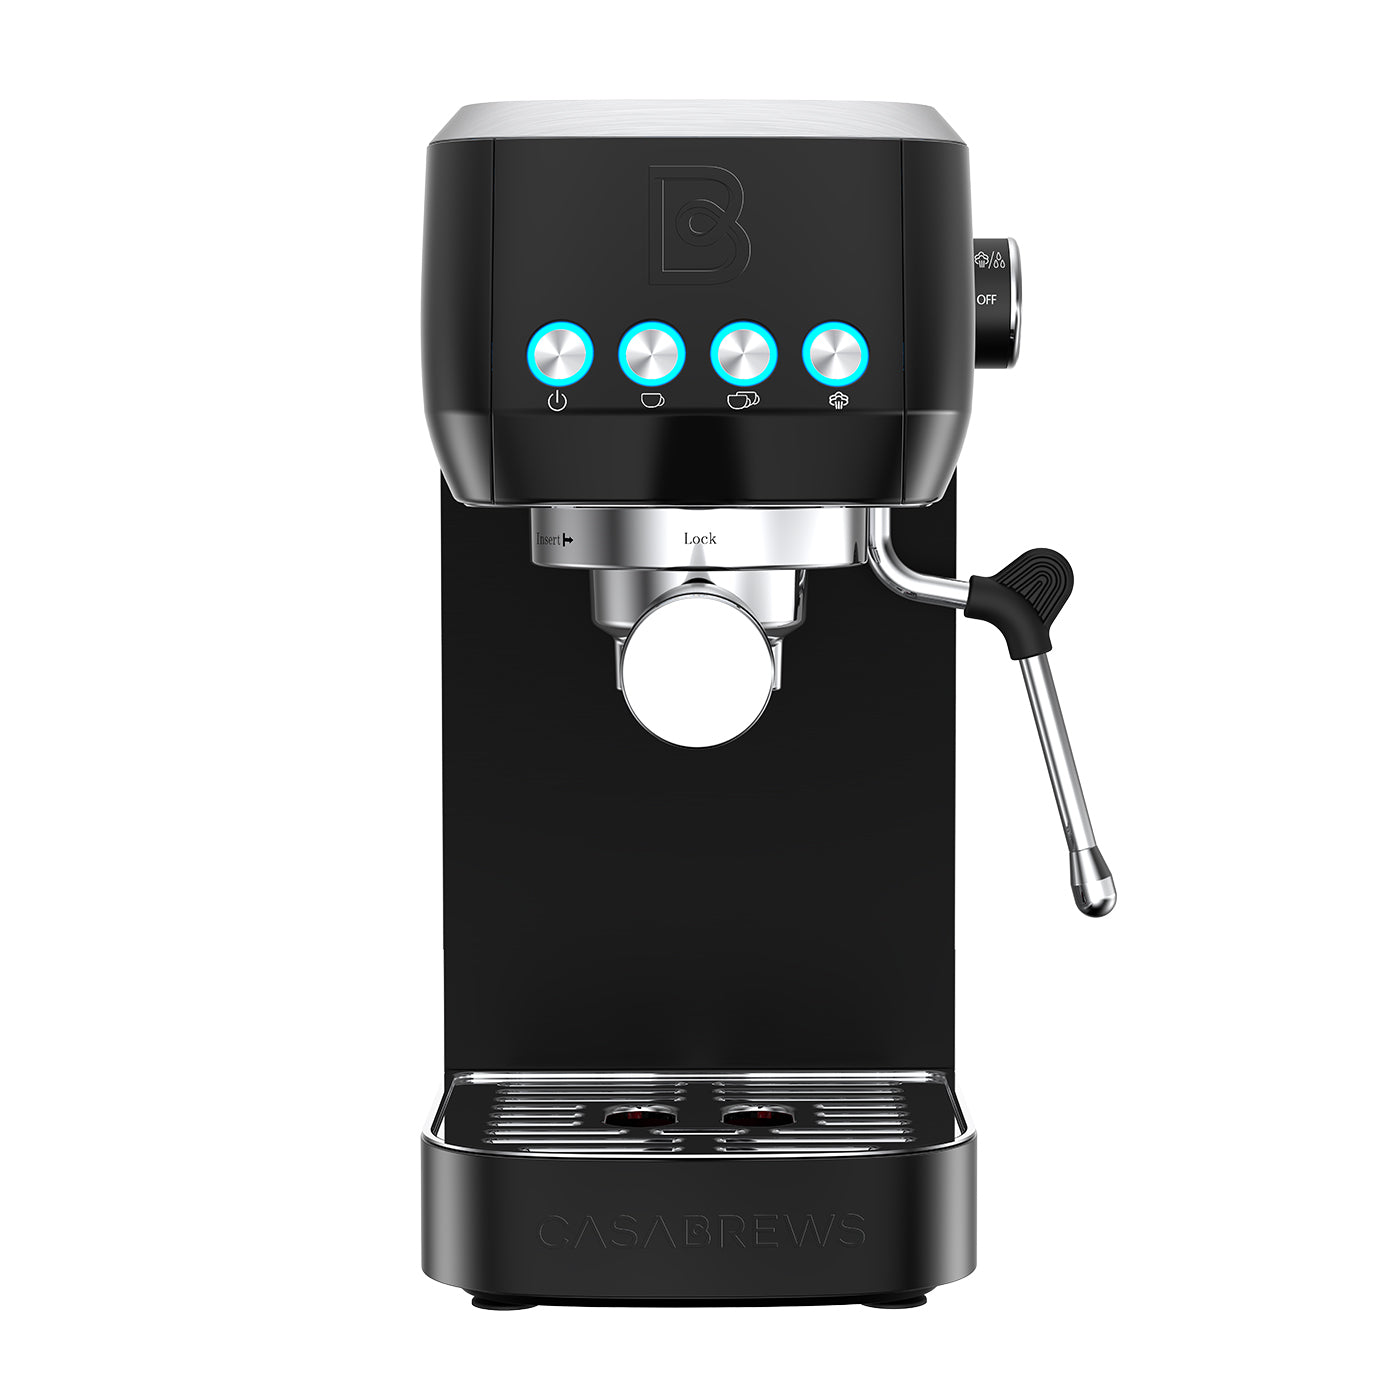 Portable Espresso Machine Market to Observe Strong Development by Melitta,  Simens, Panasonic